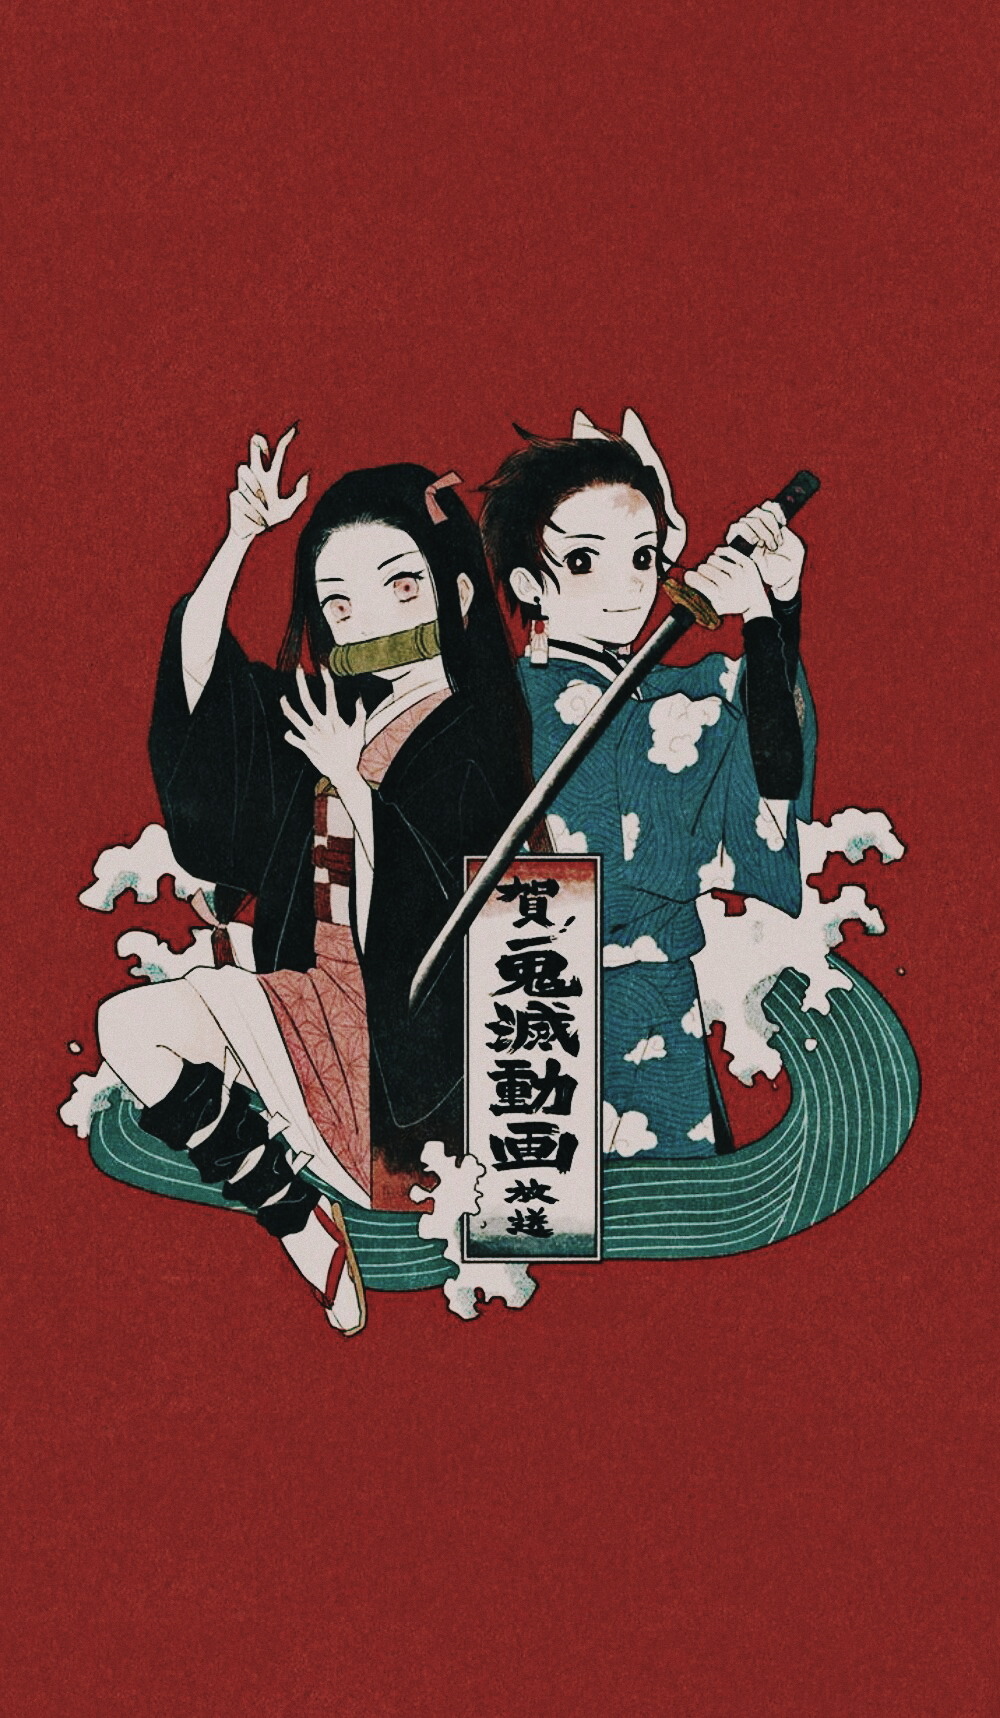 kimetsu no yaiba wallpaper on Tumblr